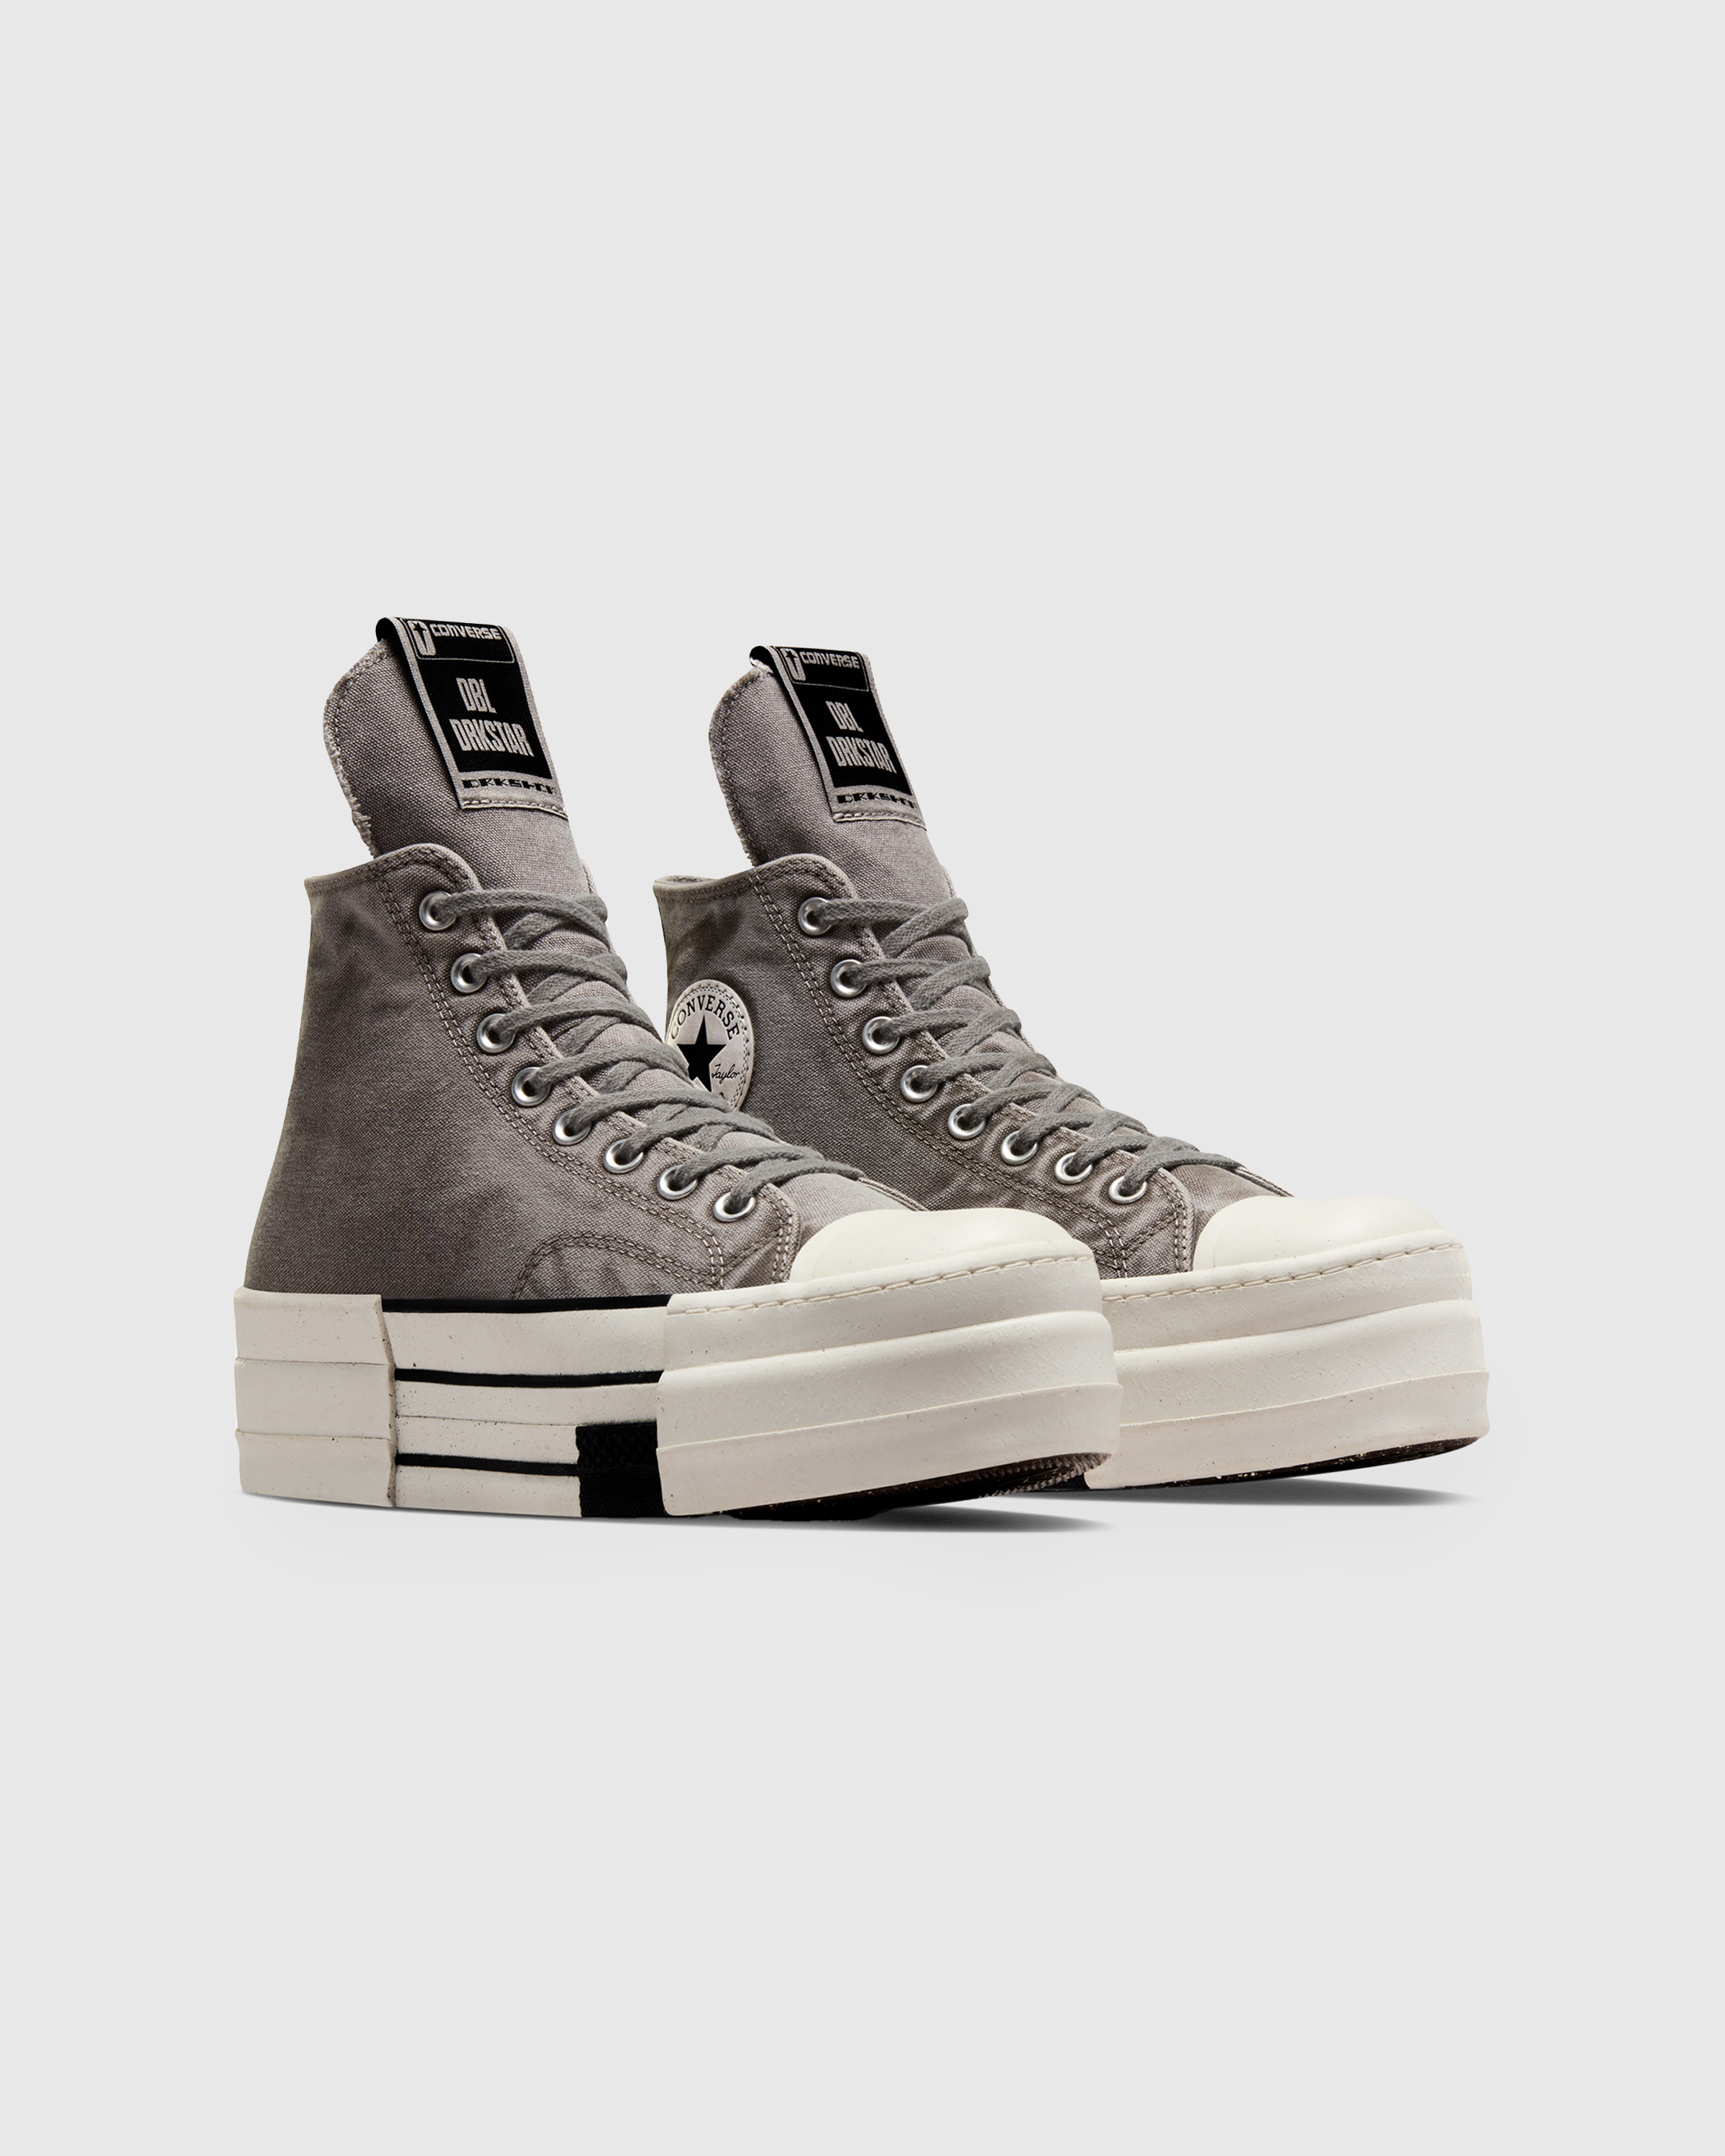 Converse x DRKSHDW – DBL DRKSTAR Chuck 70 Hi Concrete - High Top Sneakers - Grey - Image 3